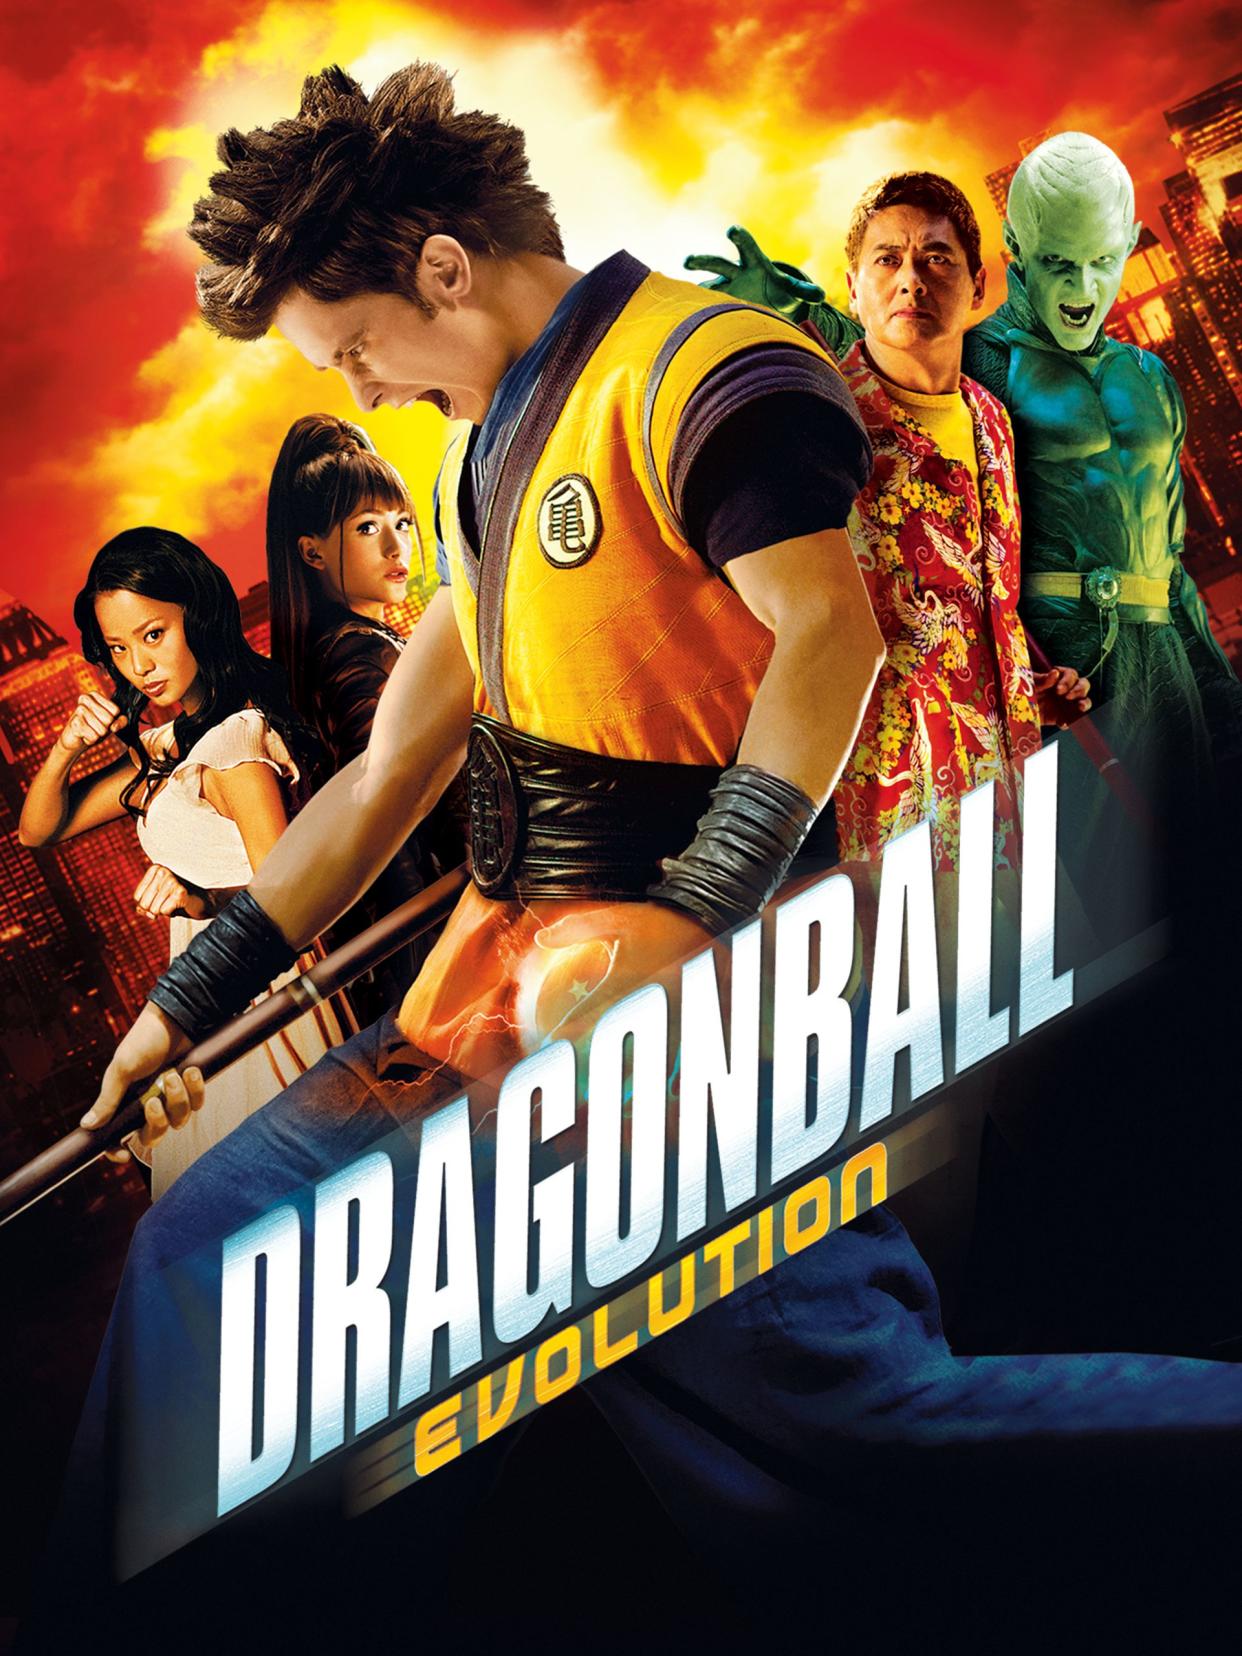 ‘Dragonball Evolution’ (2009)